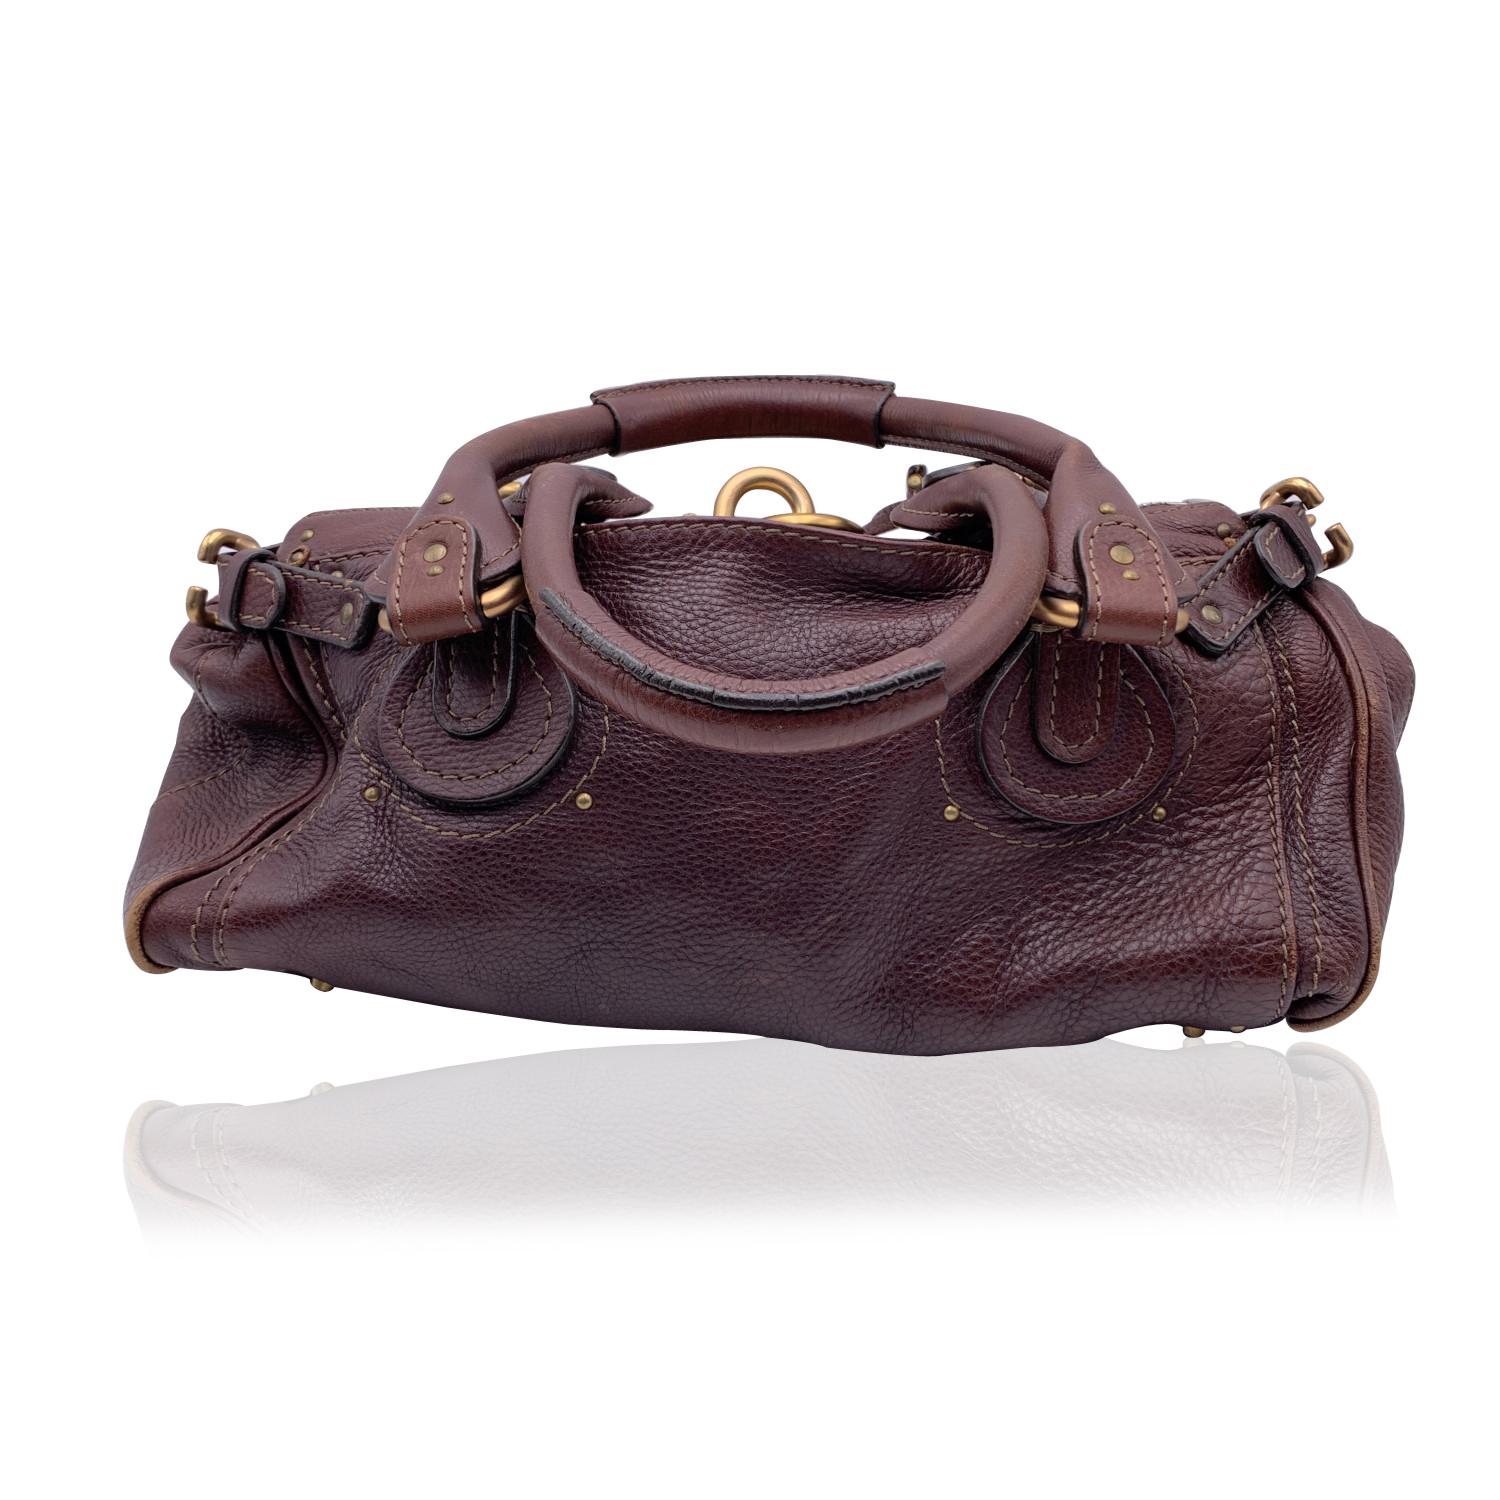 Black Chloe Brown Leather Paddington Bag Tote Satchel Handbag